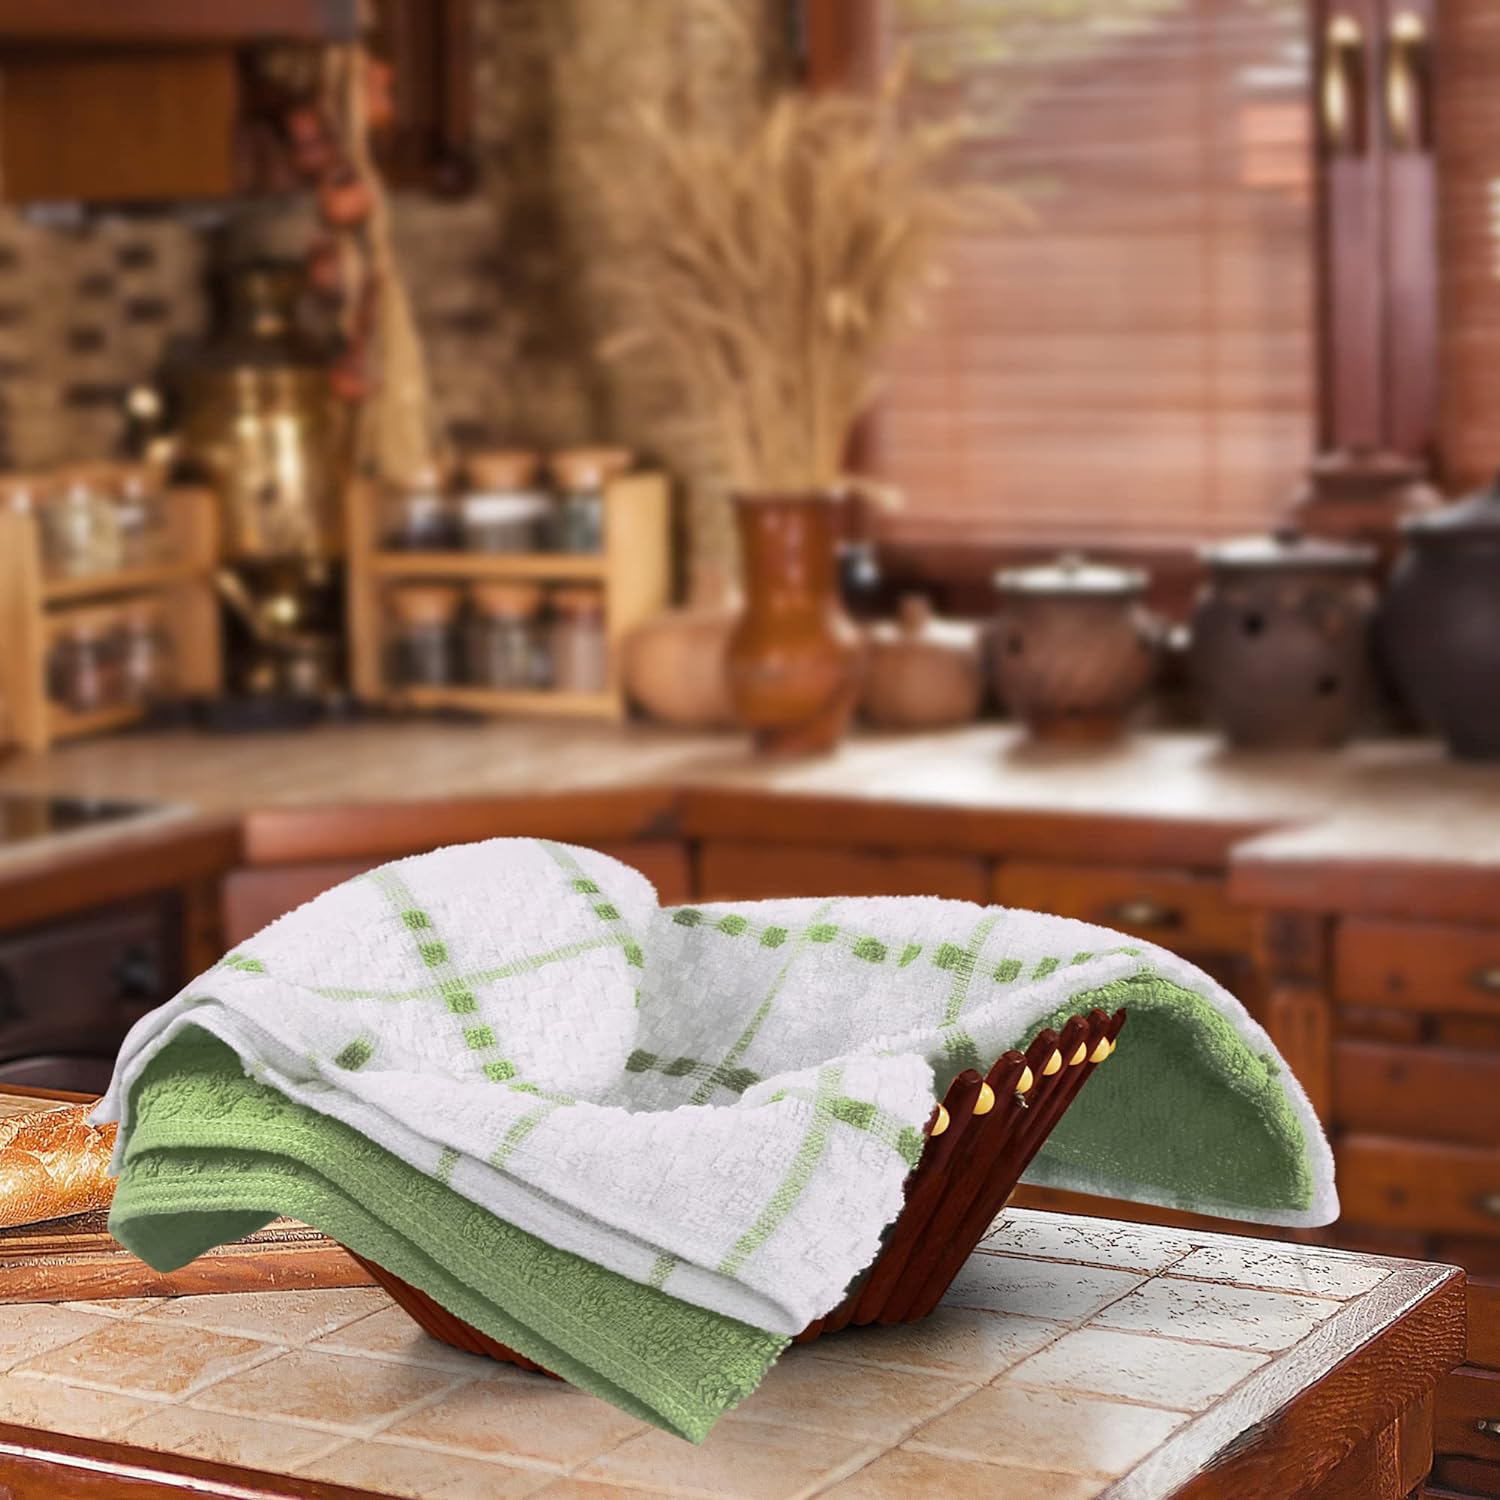 Buy Utopia Towels 8 Piece Towel Set 100% Ring Spun Cotton – Utopia Deals